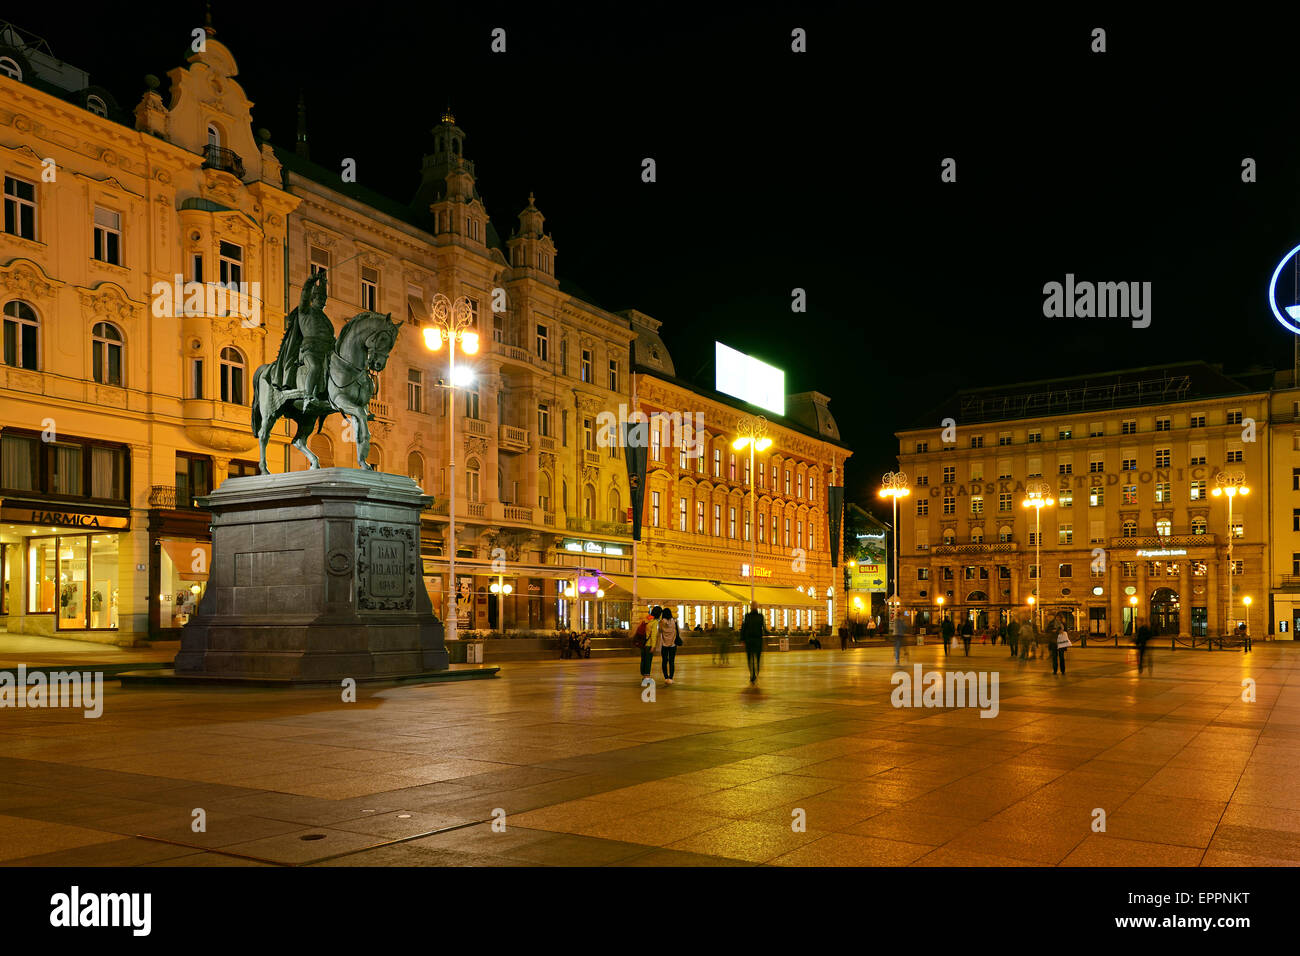 Ban Jelacic Square at Night, Zagreb, Croatia. Stock Photo